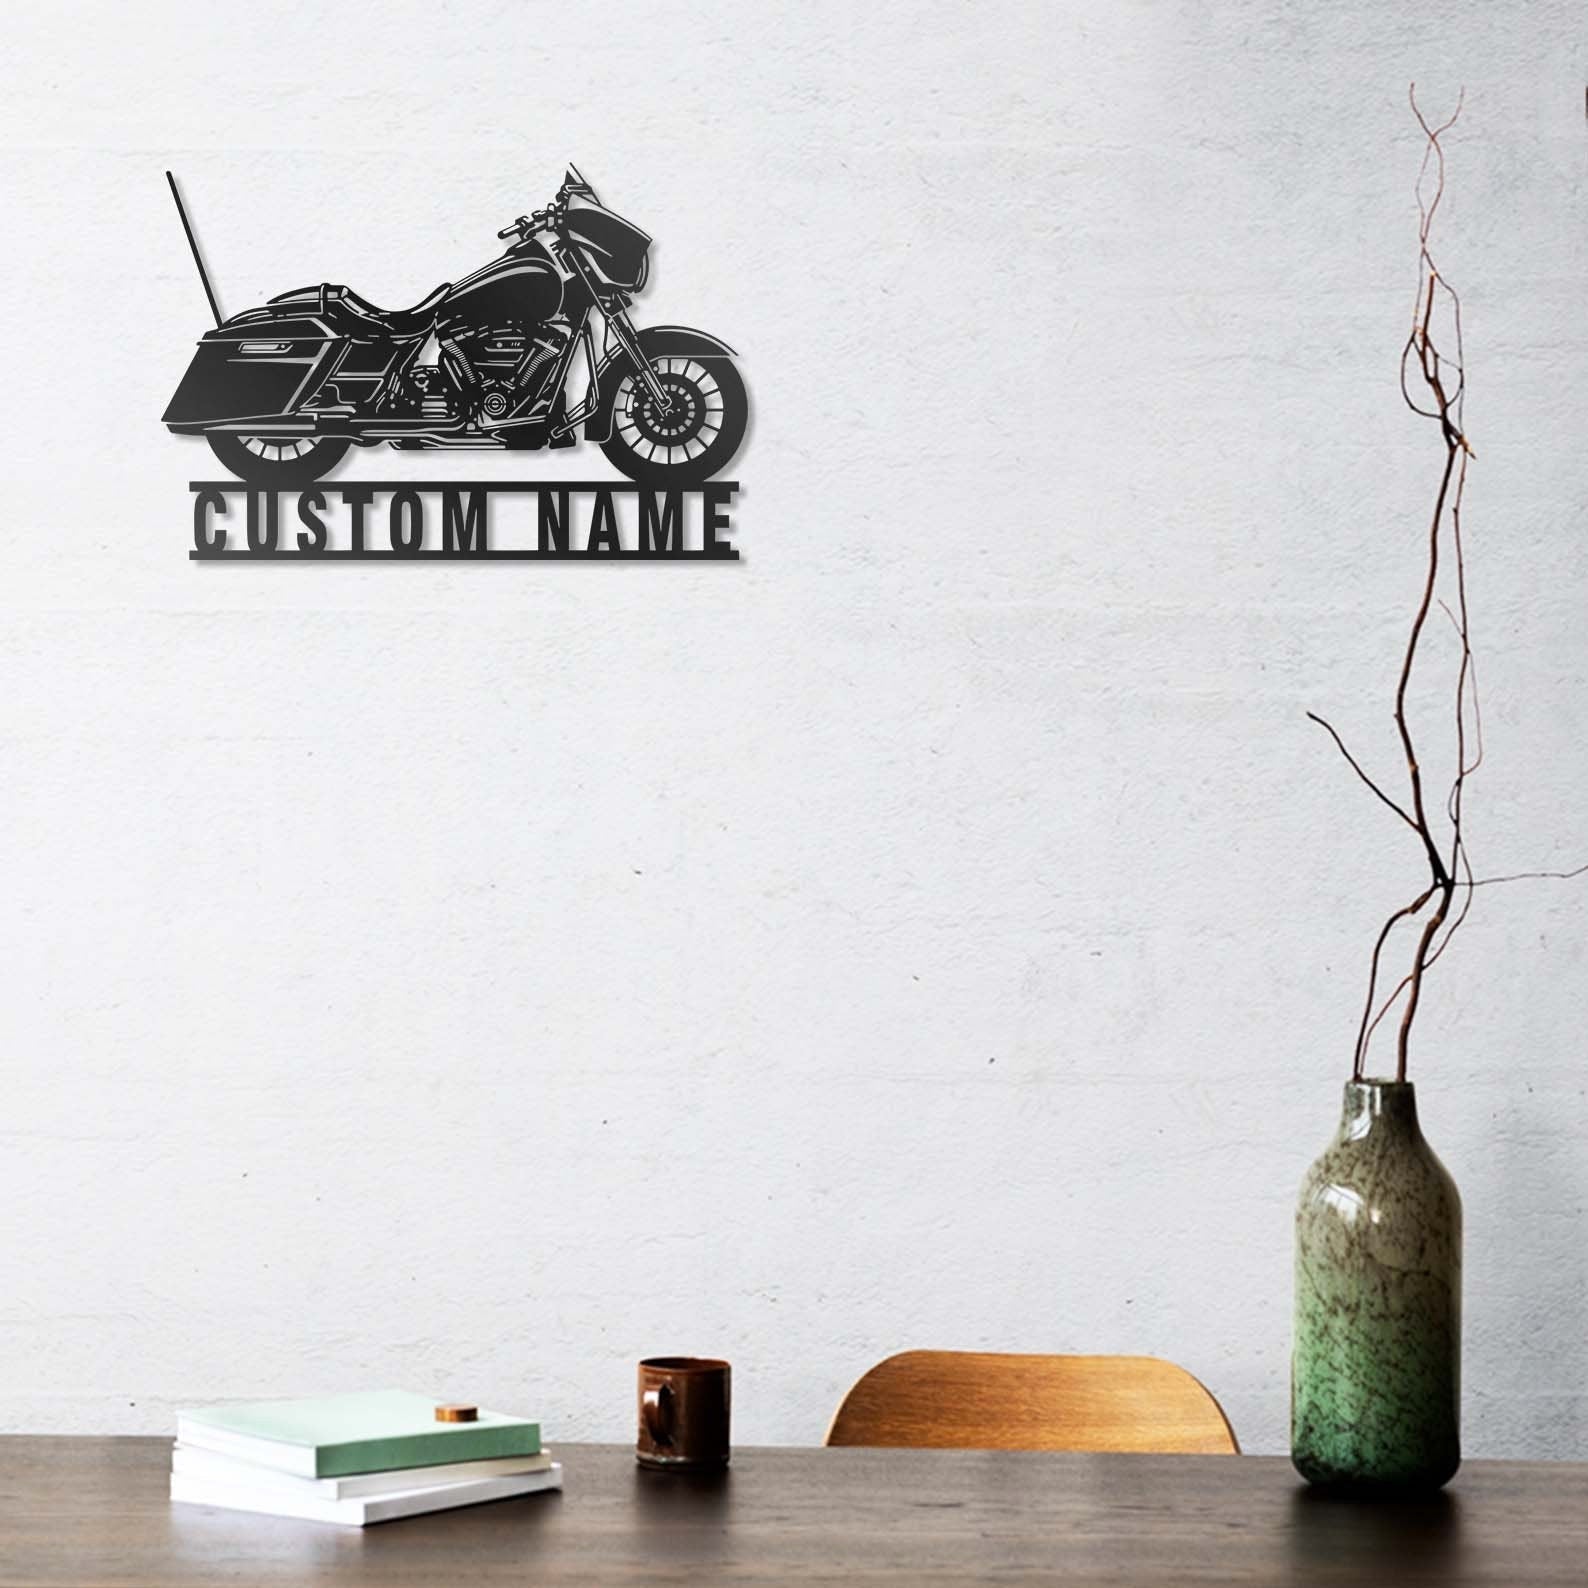 Custom Motorcycle Metal Wall Art , Personalized Motorcycle Garage Name Sign